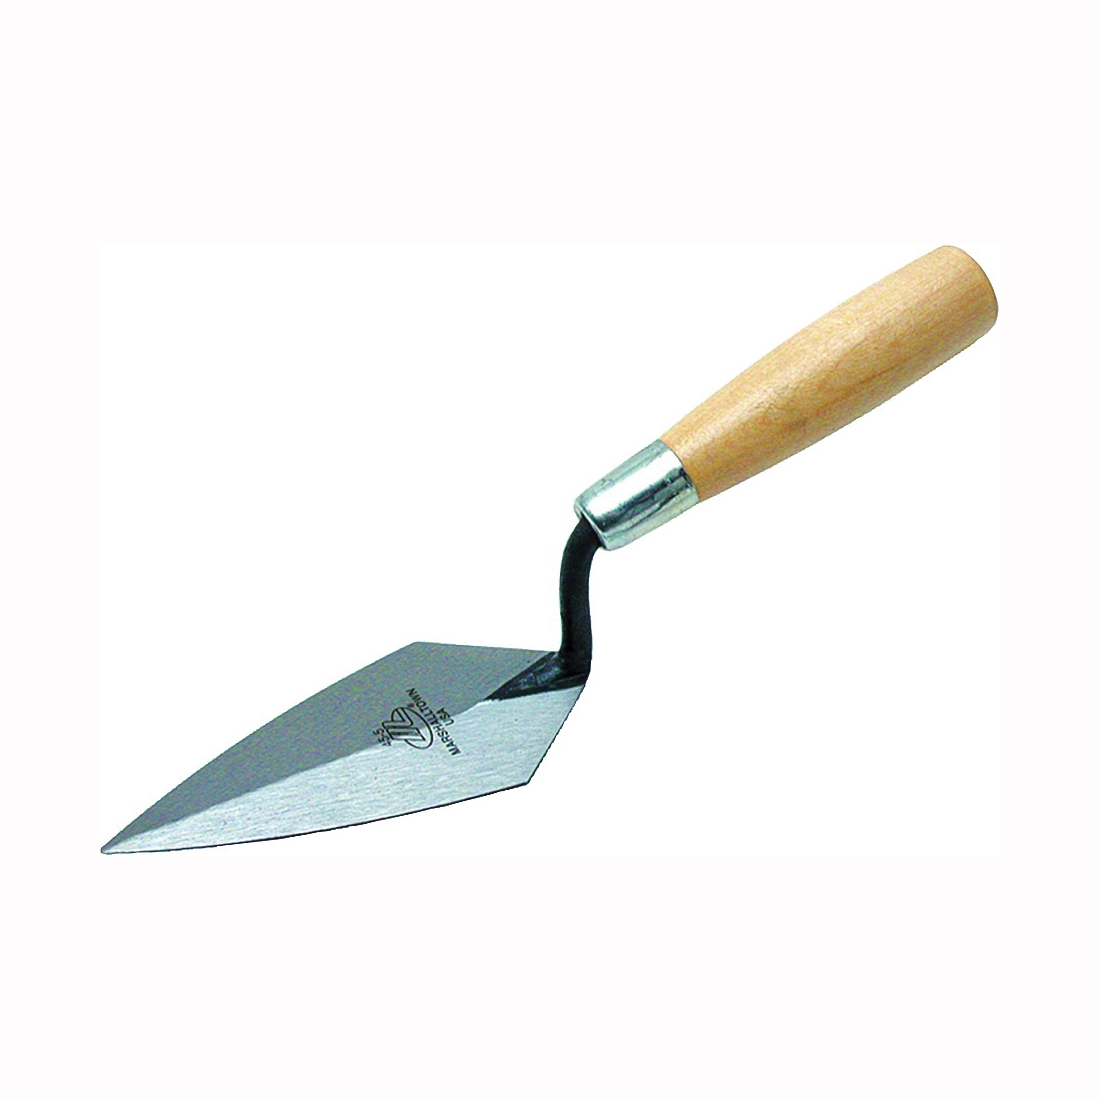 Marshalltown 45 5 Pointing Trowel, 5 in L Blade, 2-1/4 in W Blade, HCS Blade, Hardwood Handle